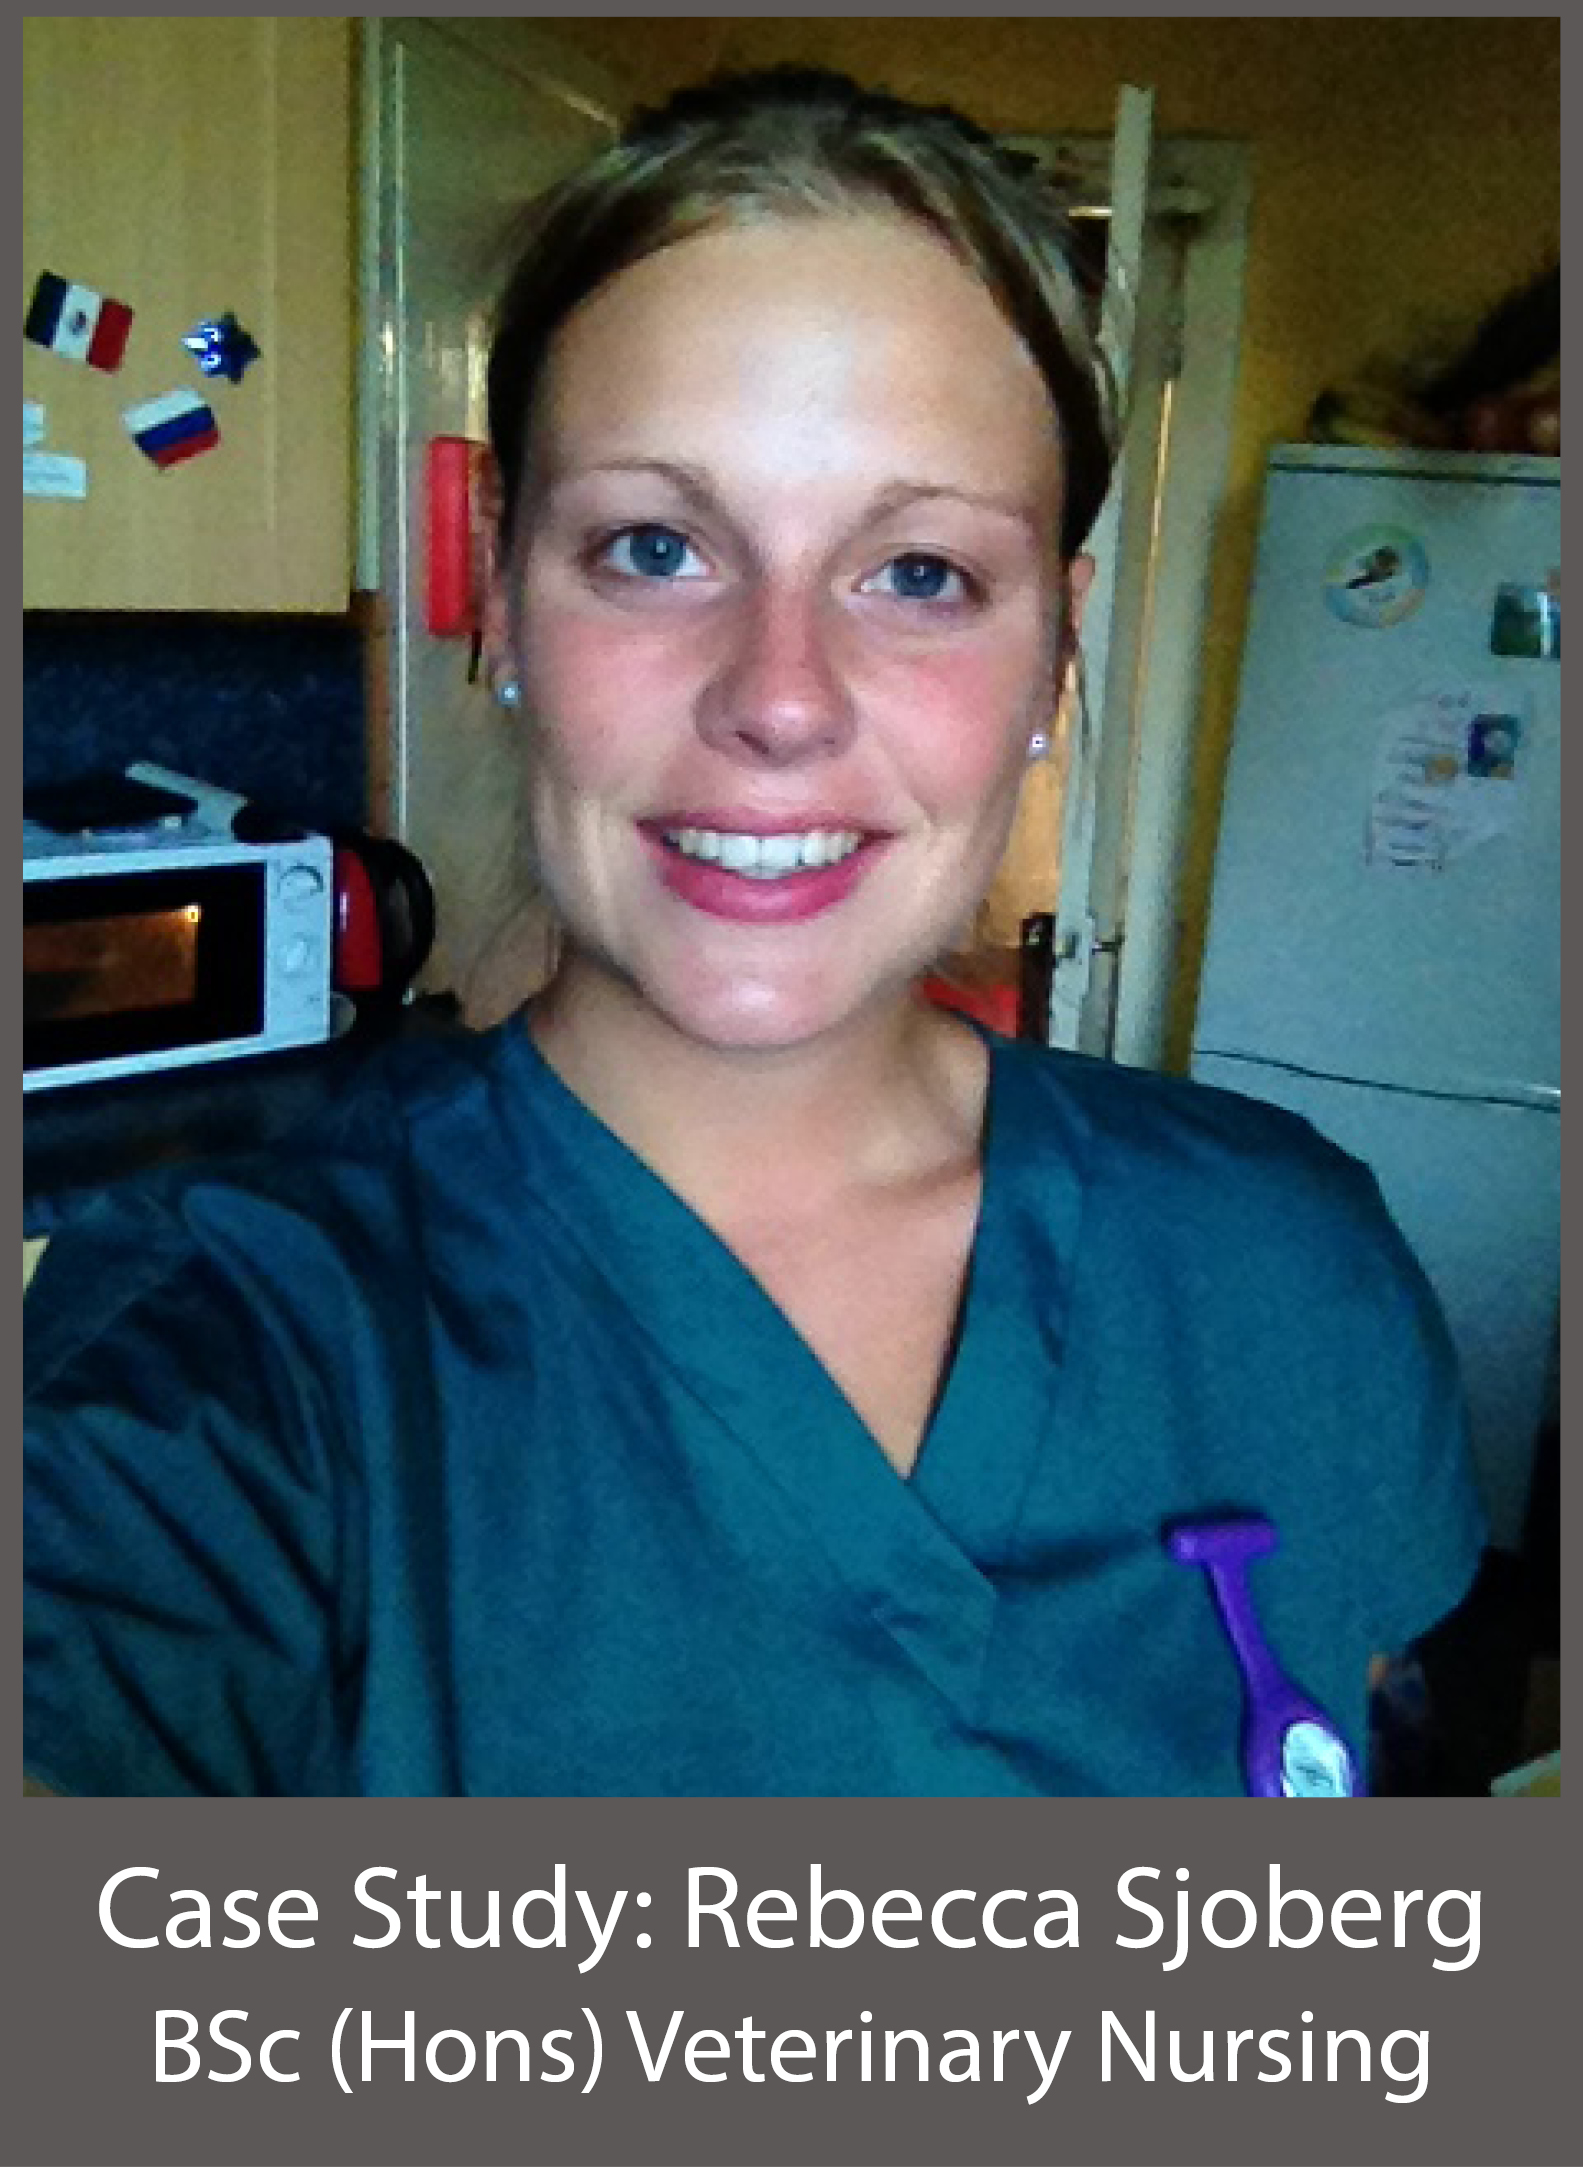 Rebecca Sjoberg BSc Vet Nurse top-up degree